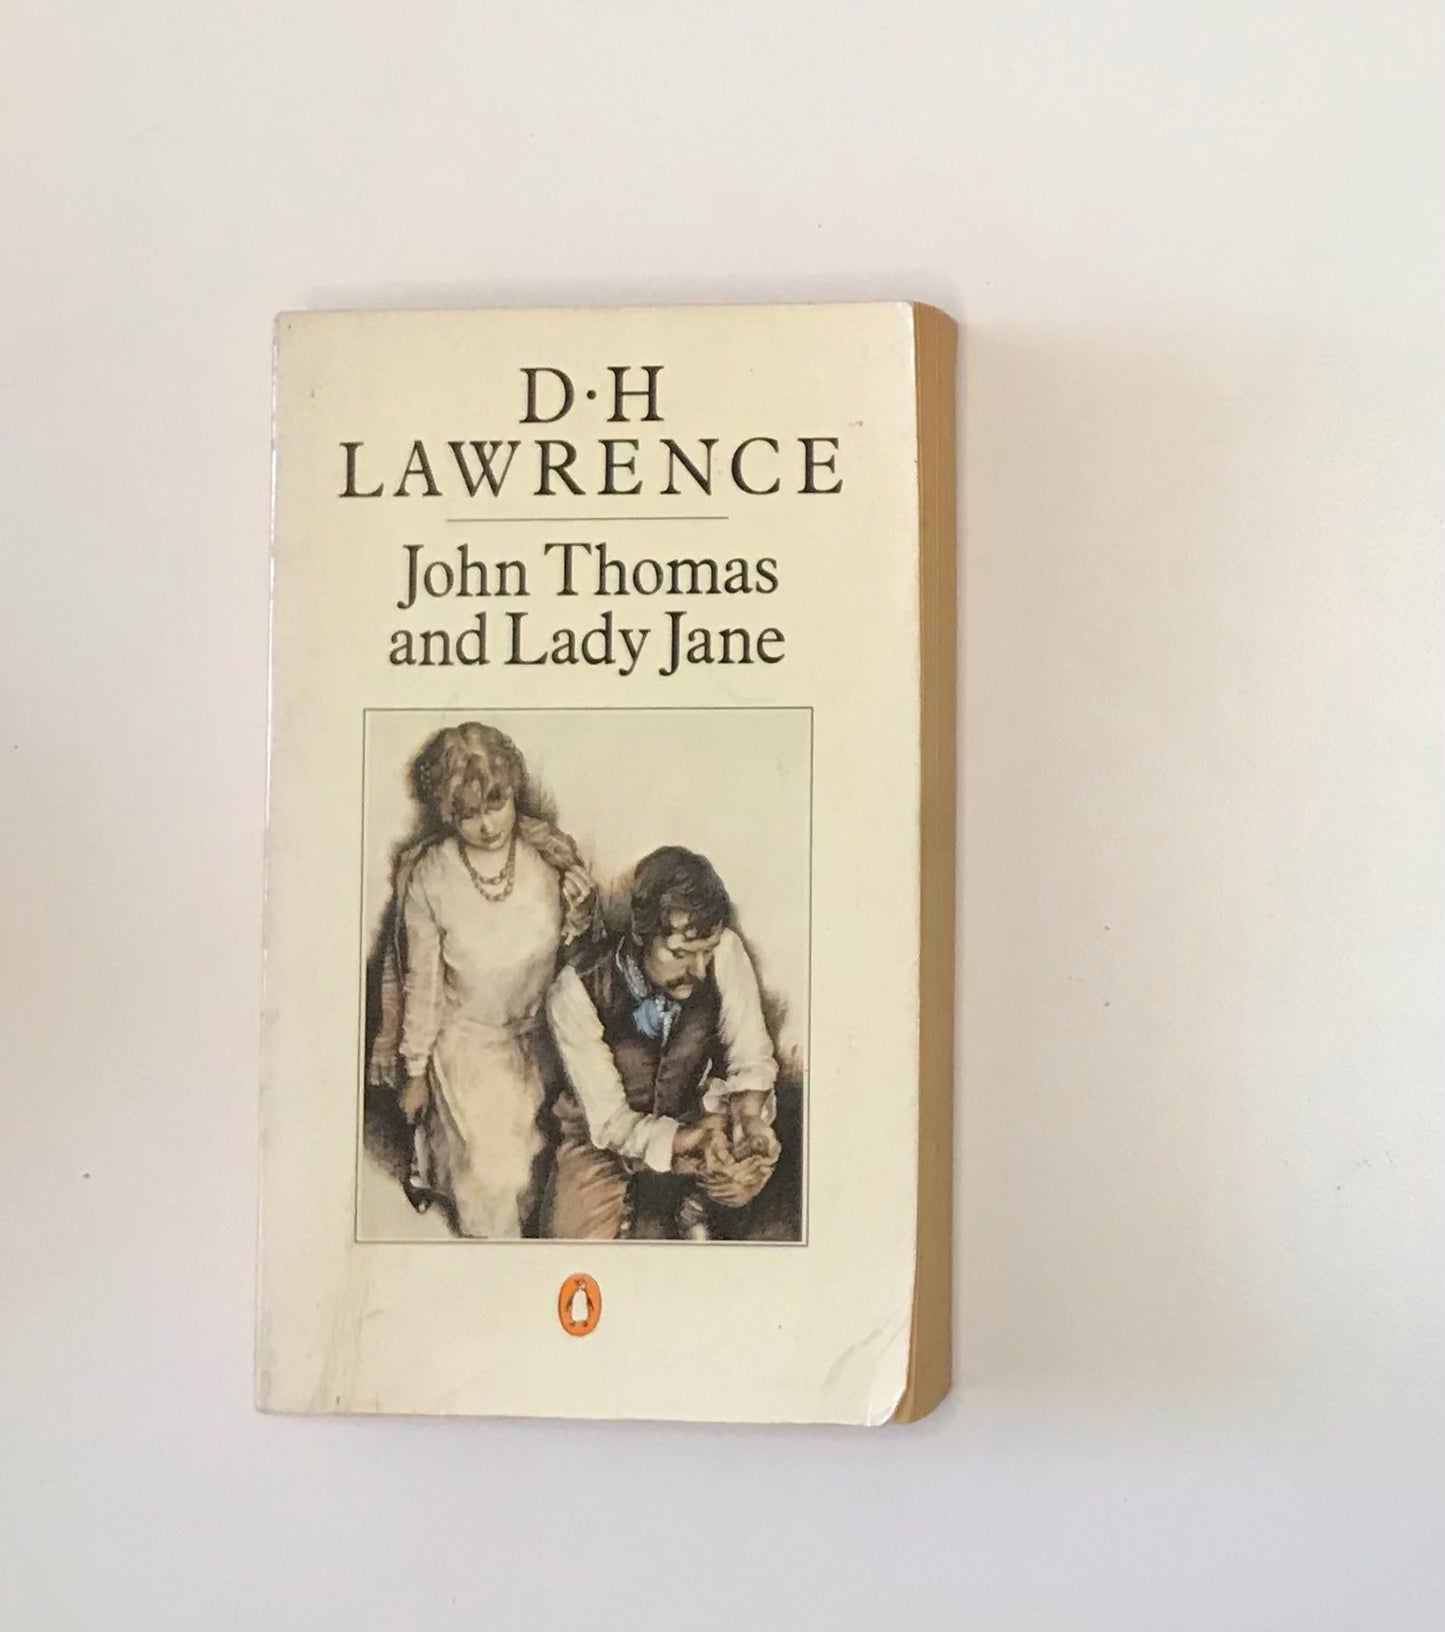 John Thomas and Lady Jane - D.H. Lawrence